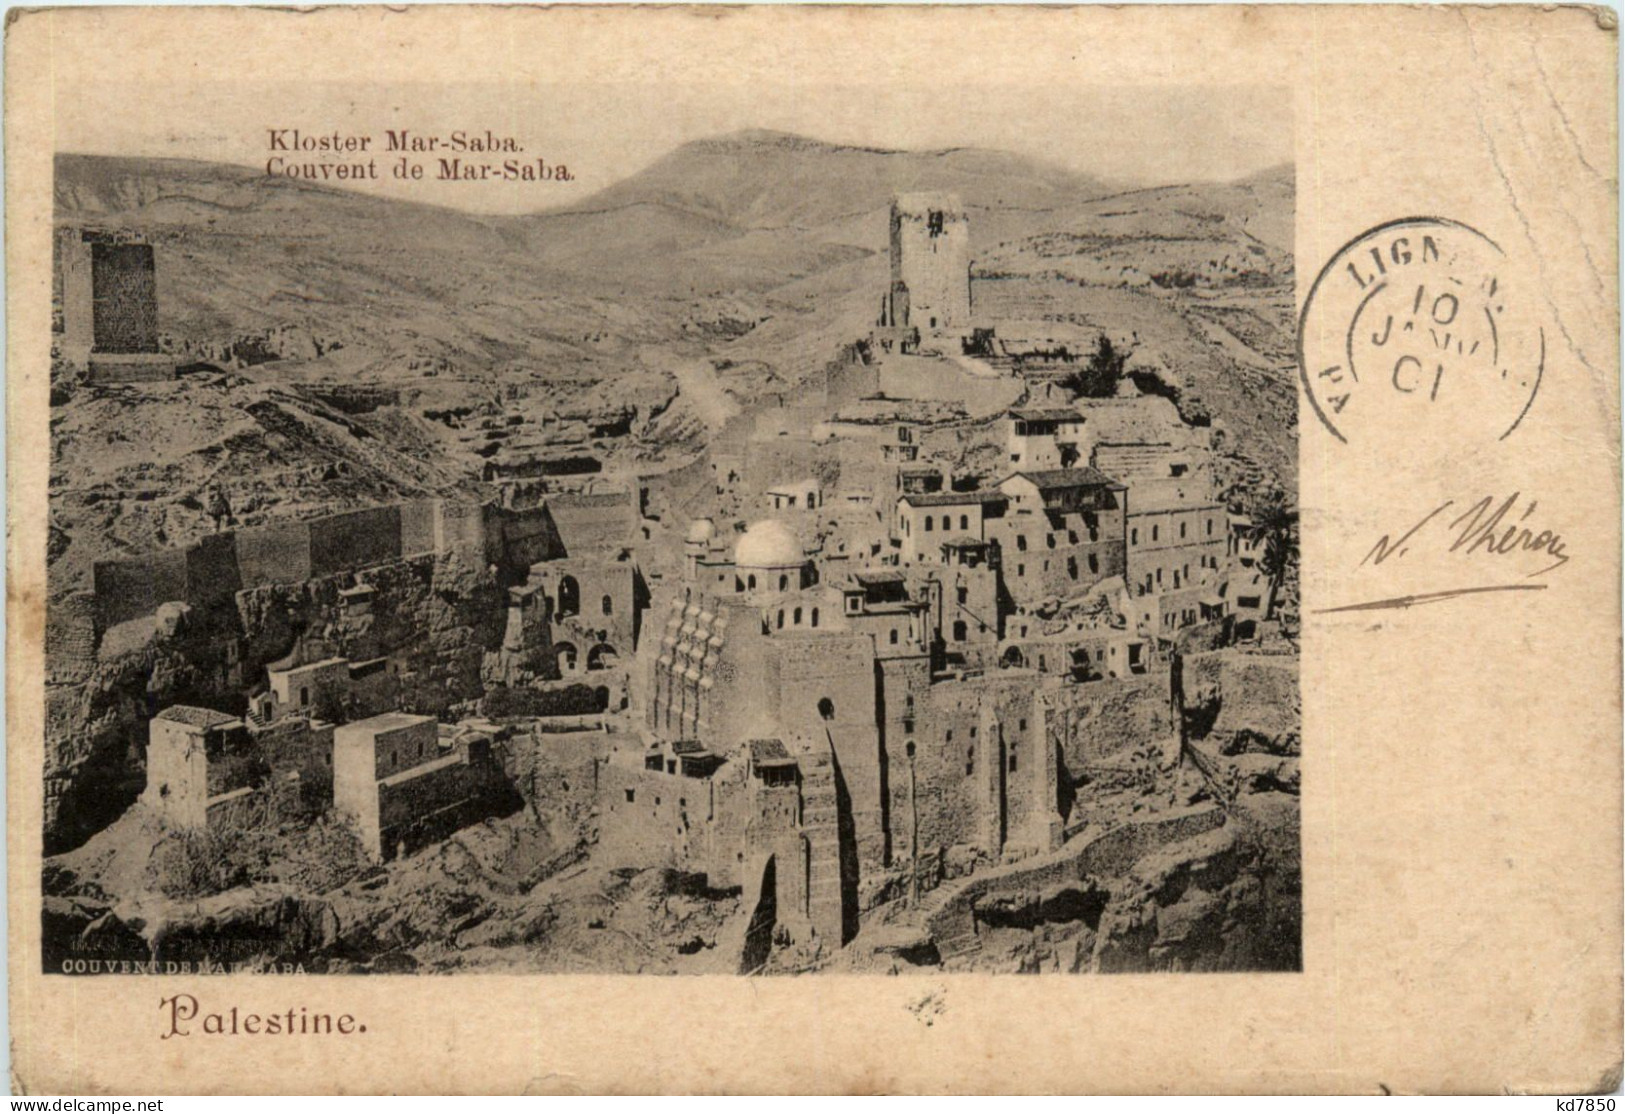 Kloster Mar-Saba - Palestina